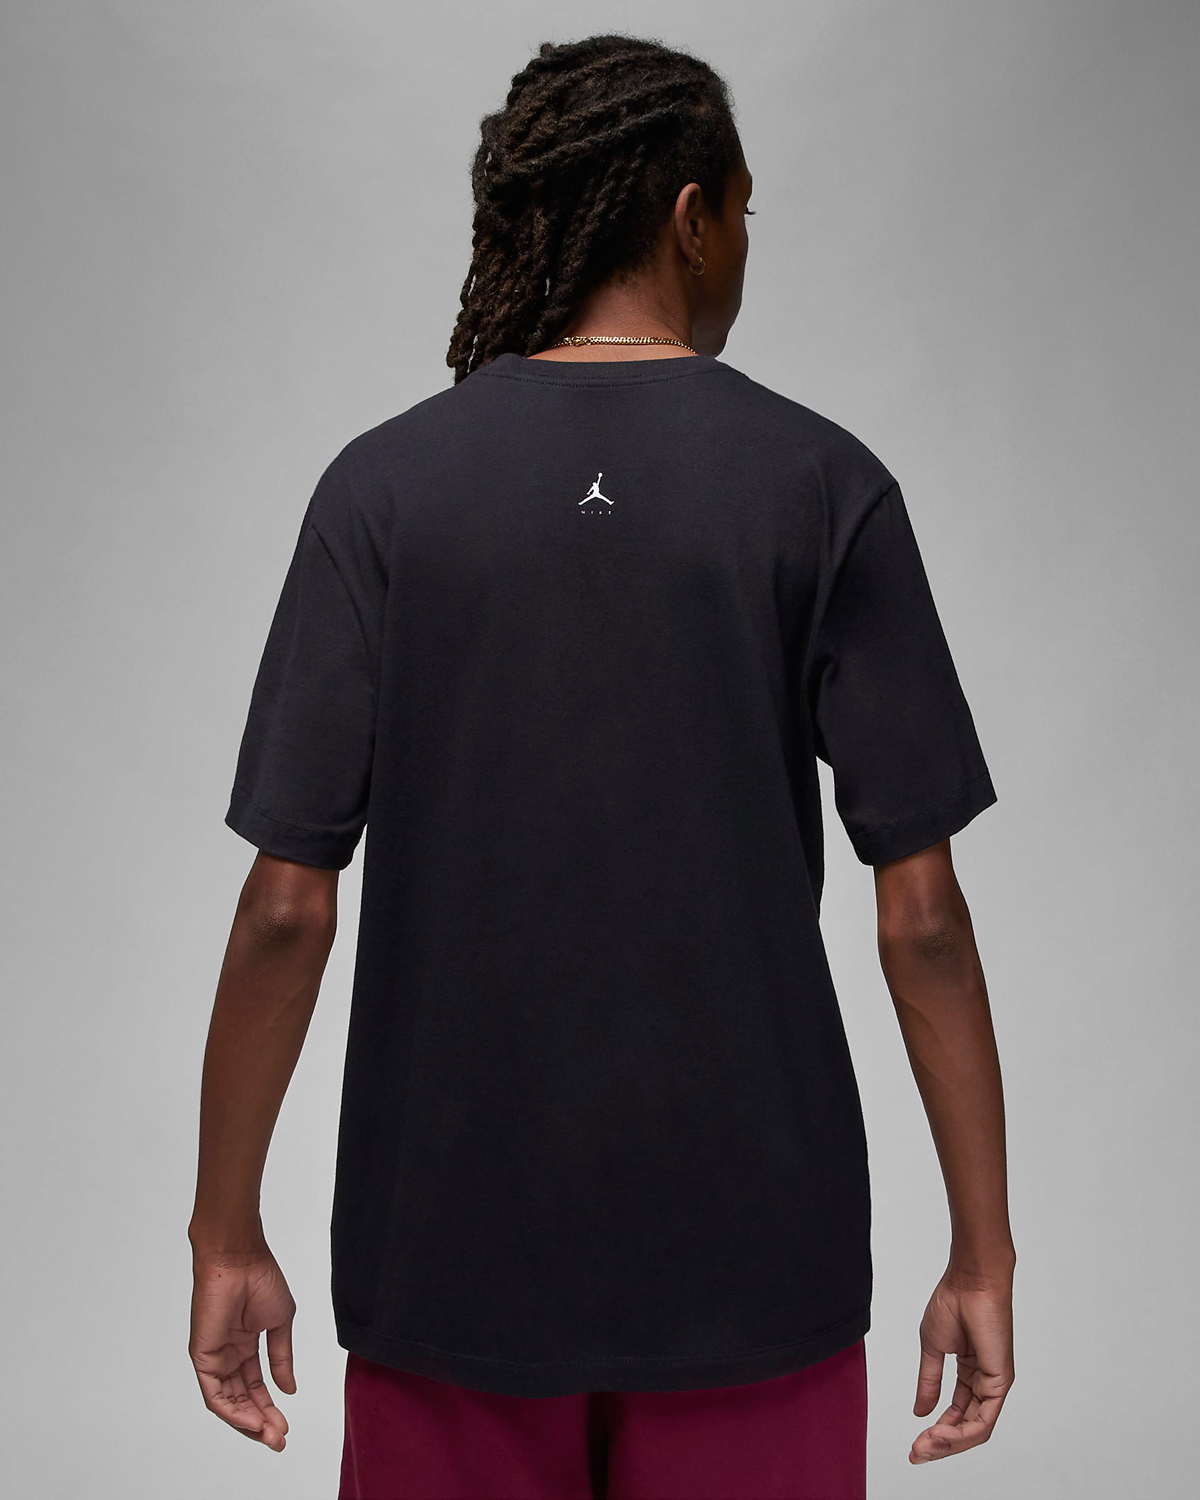 jordan-flight-mvp-t-shirt-black-infrared-2